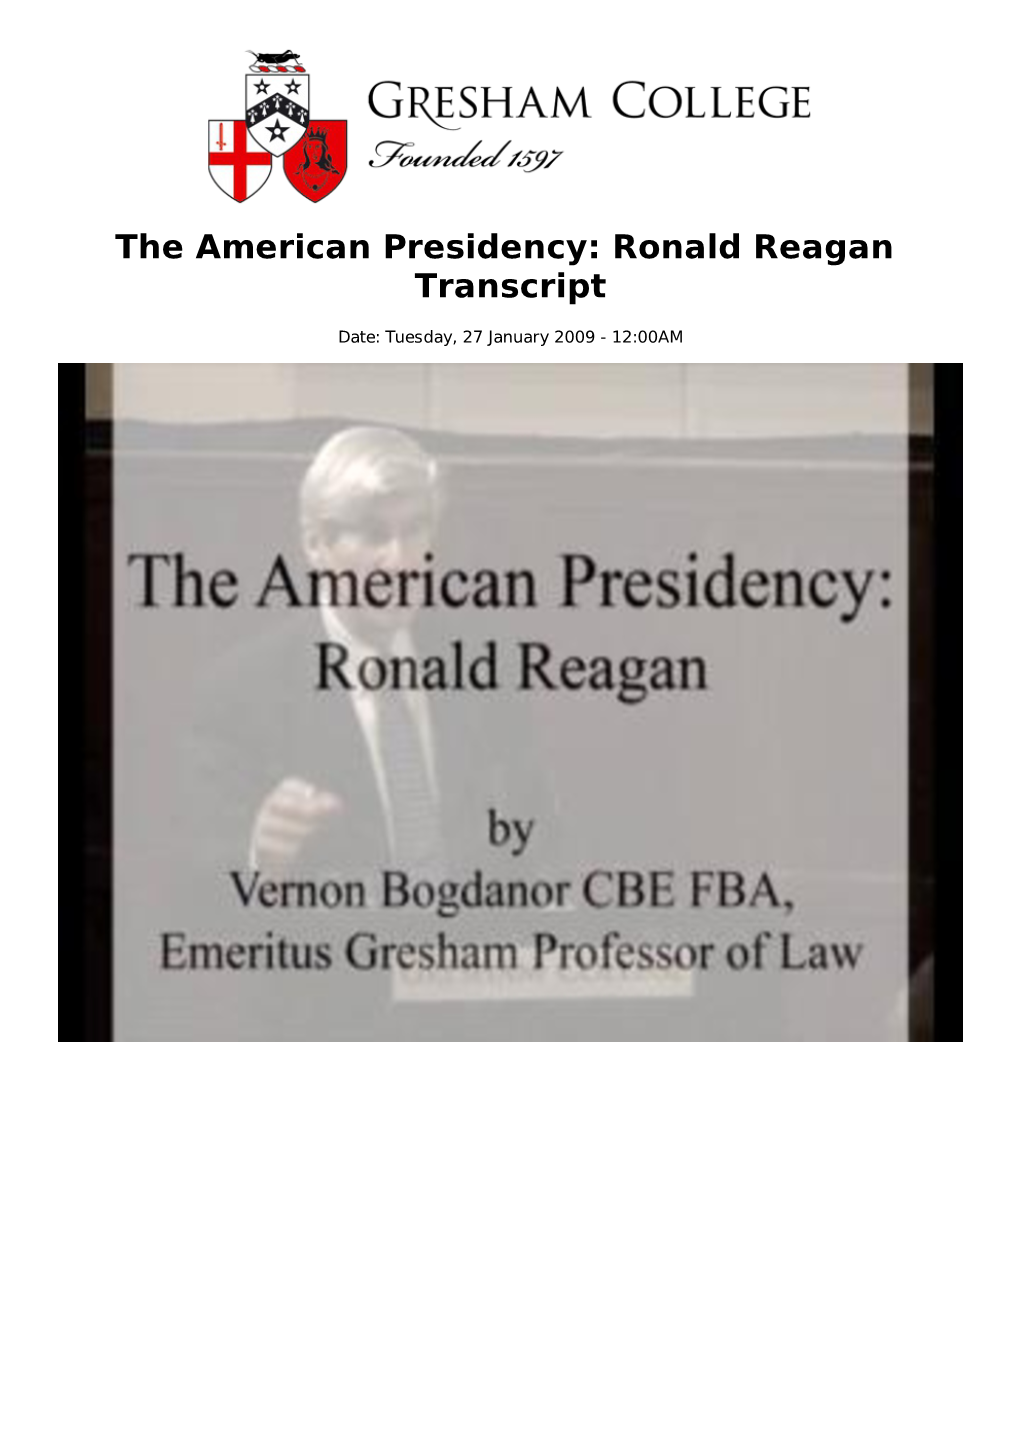 The American Presidency: Ronald Reagan Transcript